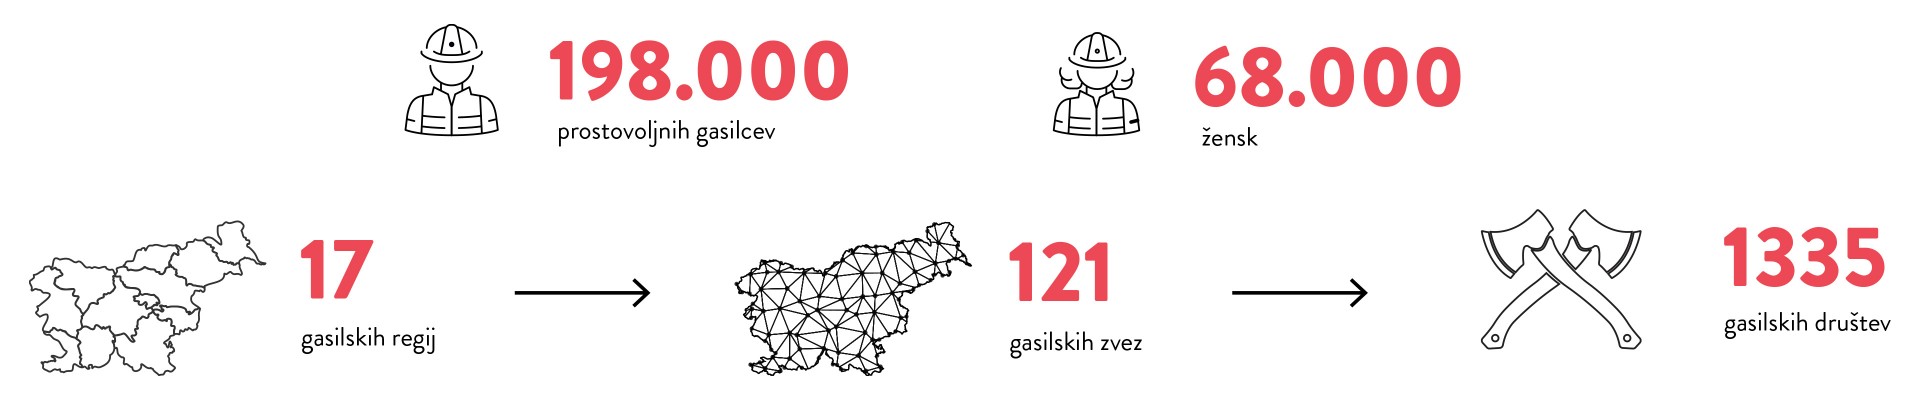 Prostovoljni gasilci, prostovoljno gasilstvo v Sloveniji